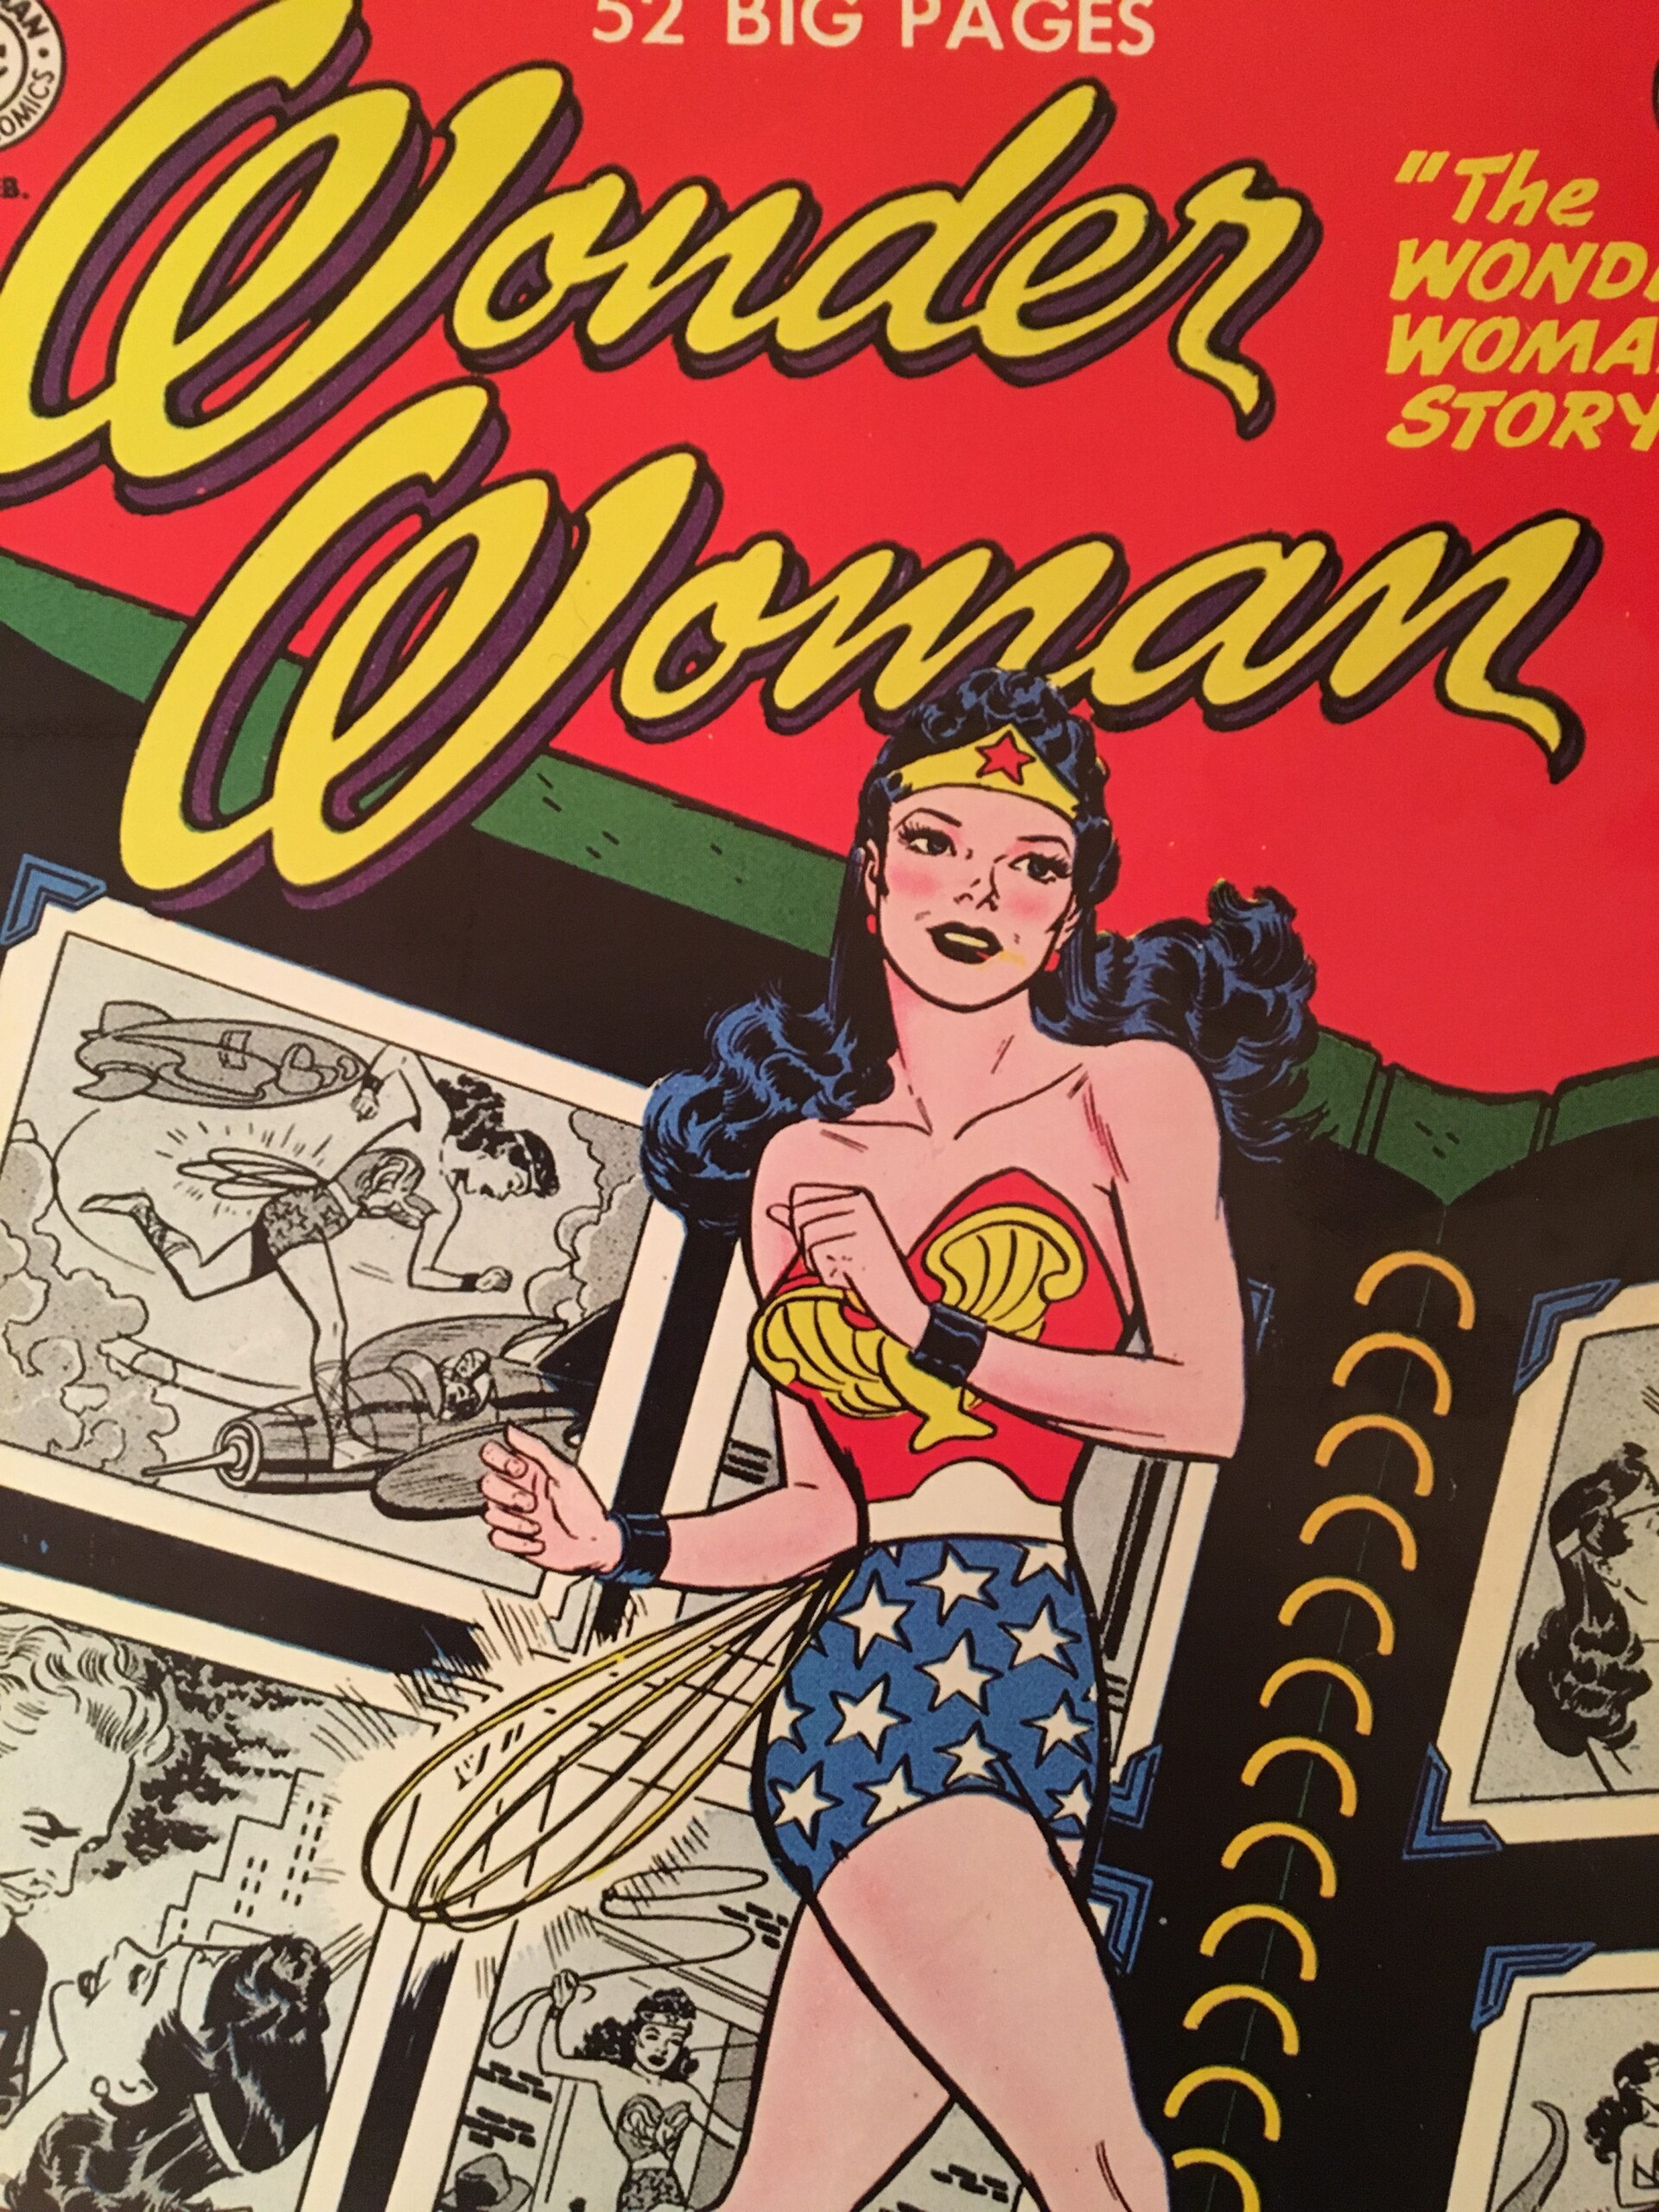 The Wonder Woman Story!